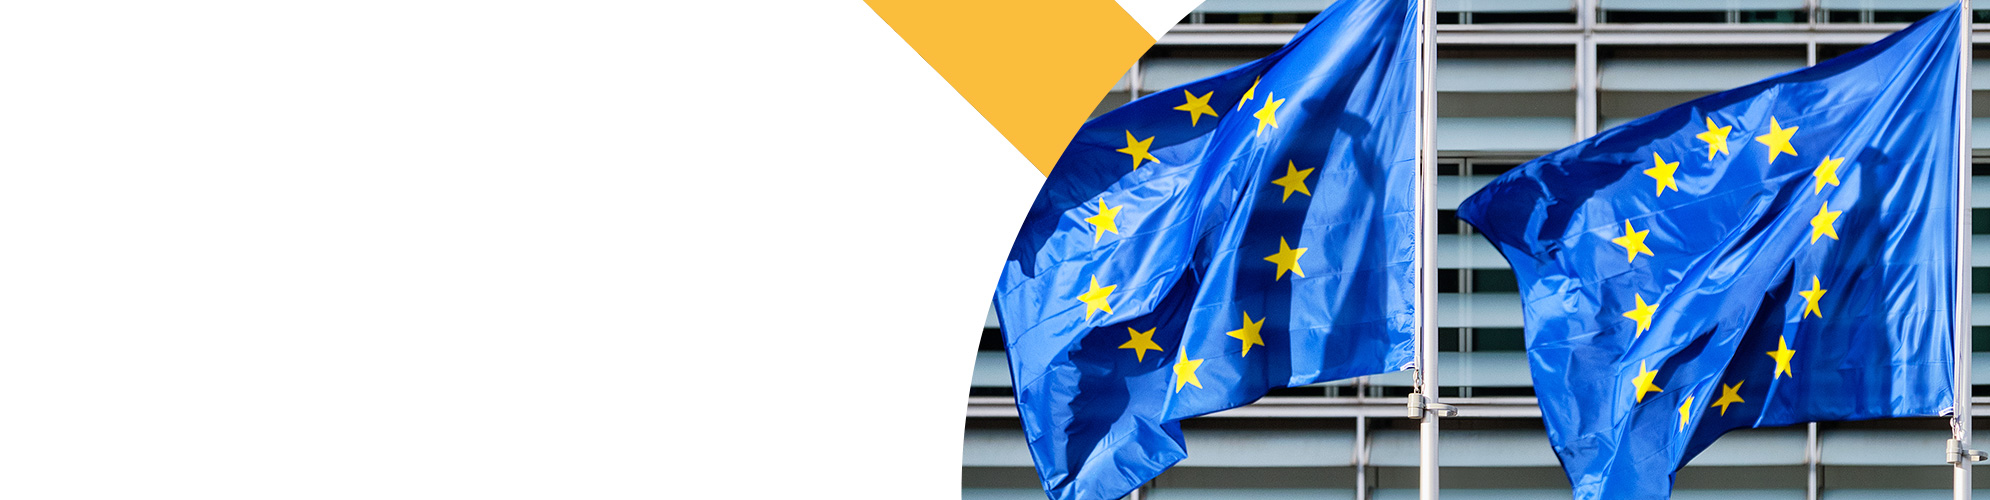 banderas europeas Oficina Técnica de ayudas públicas 